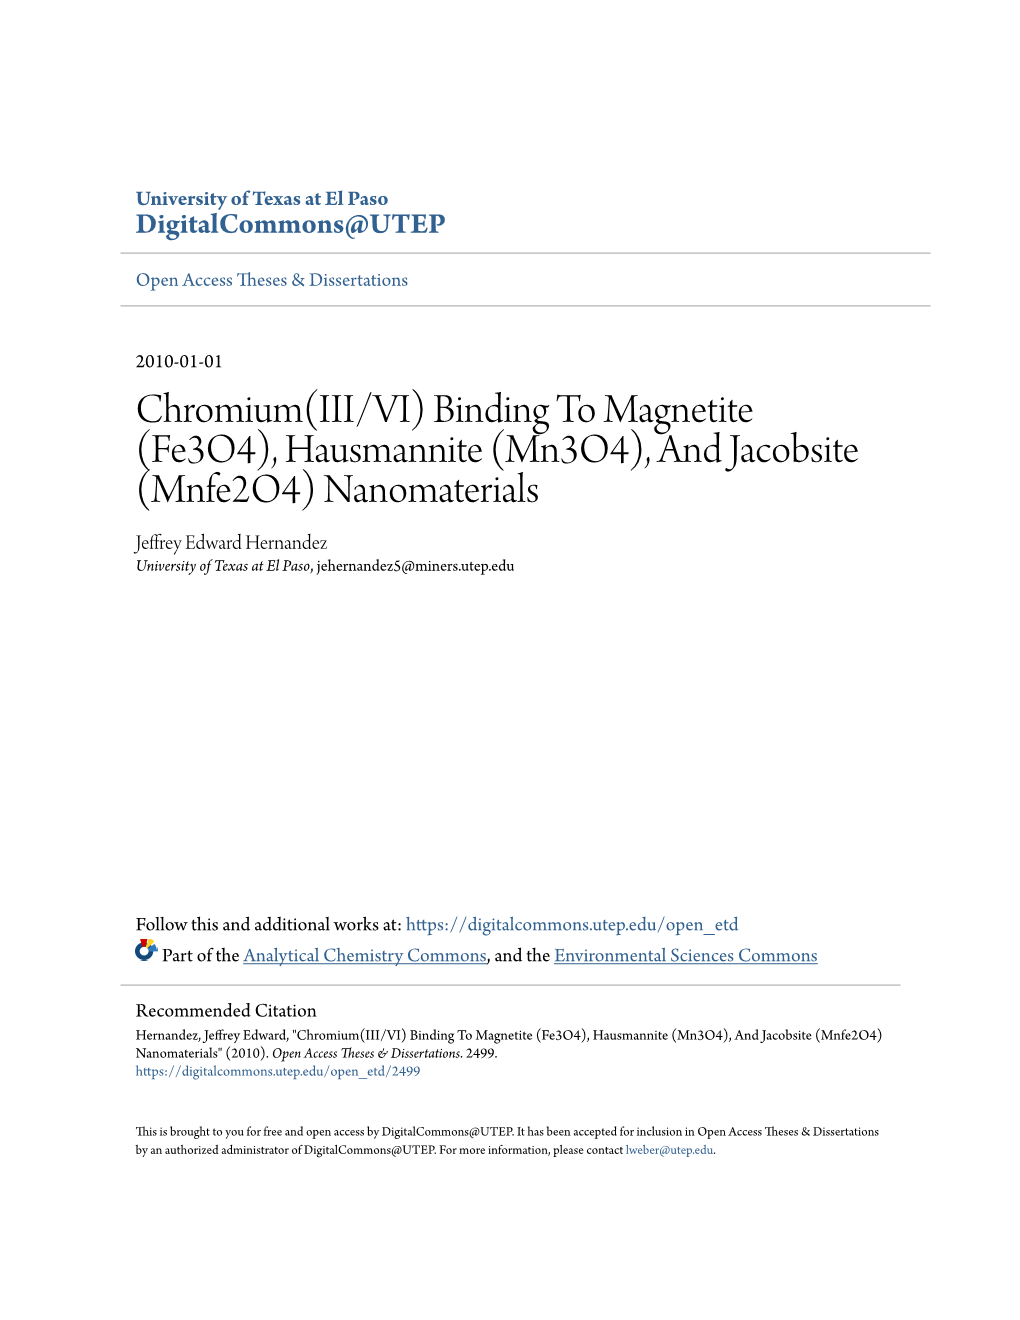 Chromium(III/VI) Binding to Magnetite (Fe3o4), Hausmannite (Mn3o4), and Jacobsite (Mnfe2o4) Nanomaterials